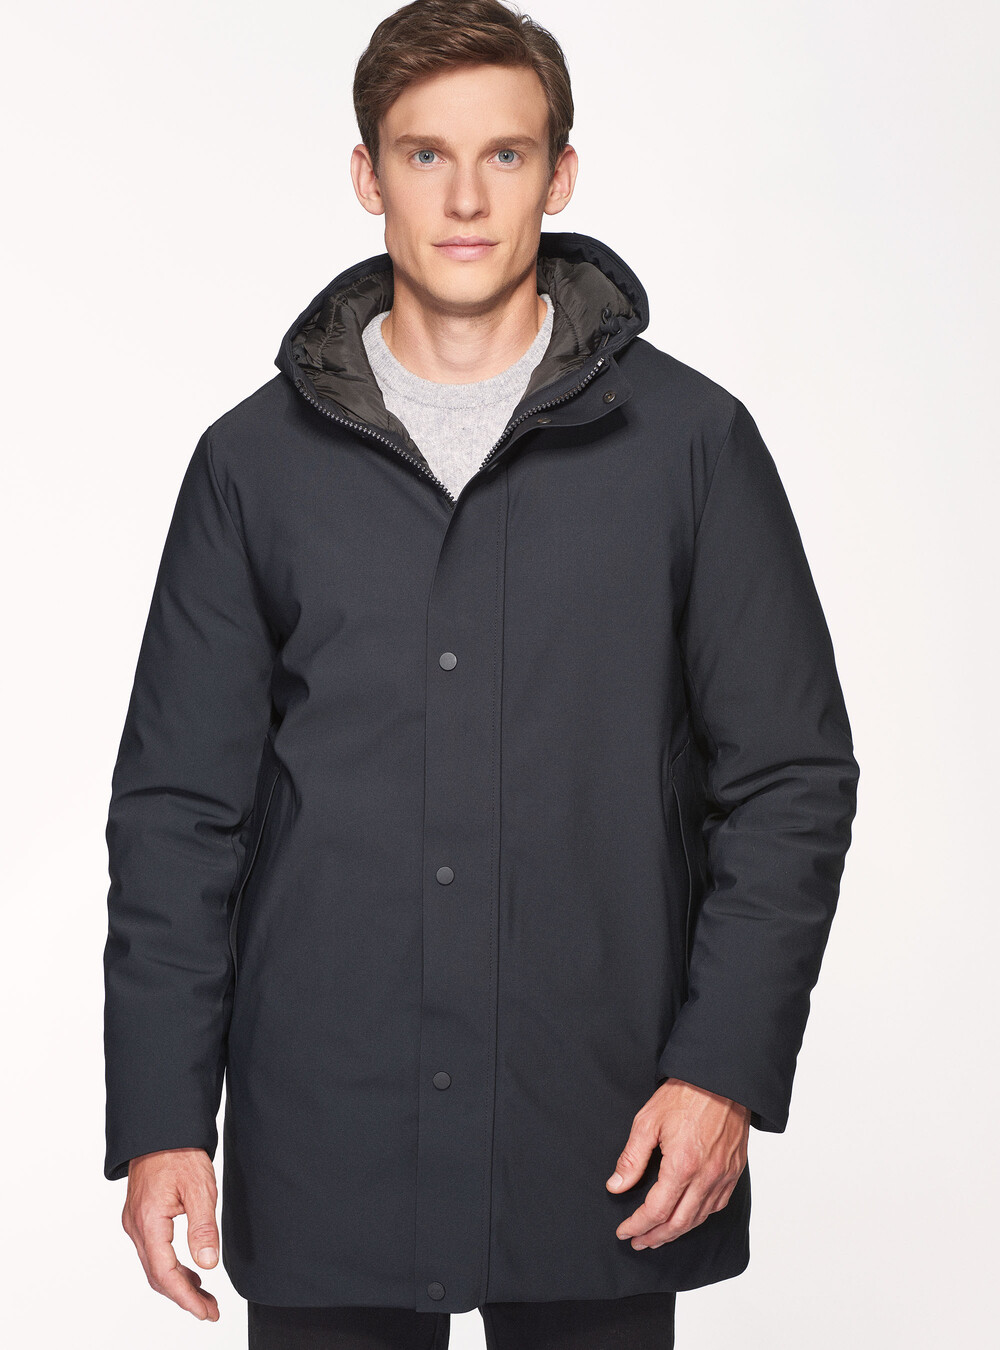 Windproof technical fabric jacket | GutteridgeEU | Jackets and ...